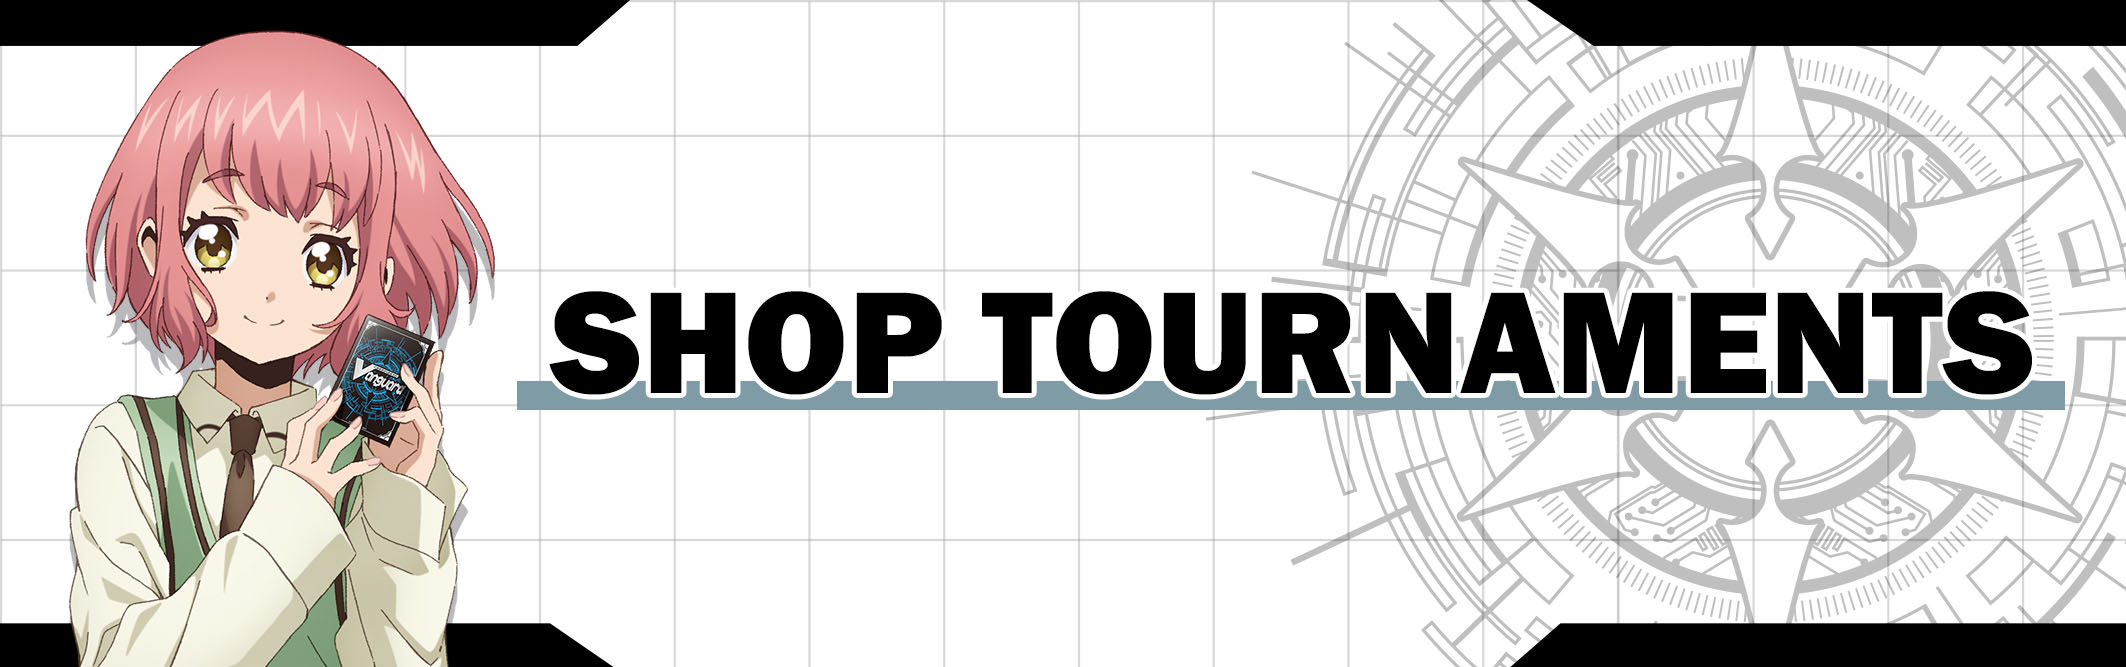 Shop Tournament Banner